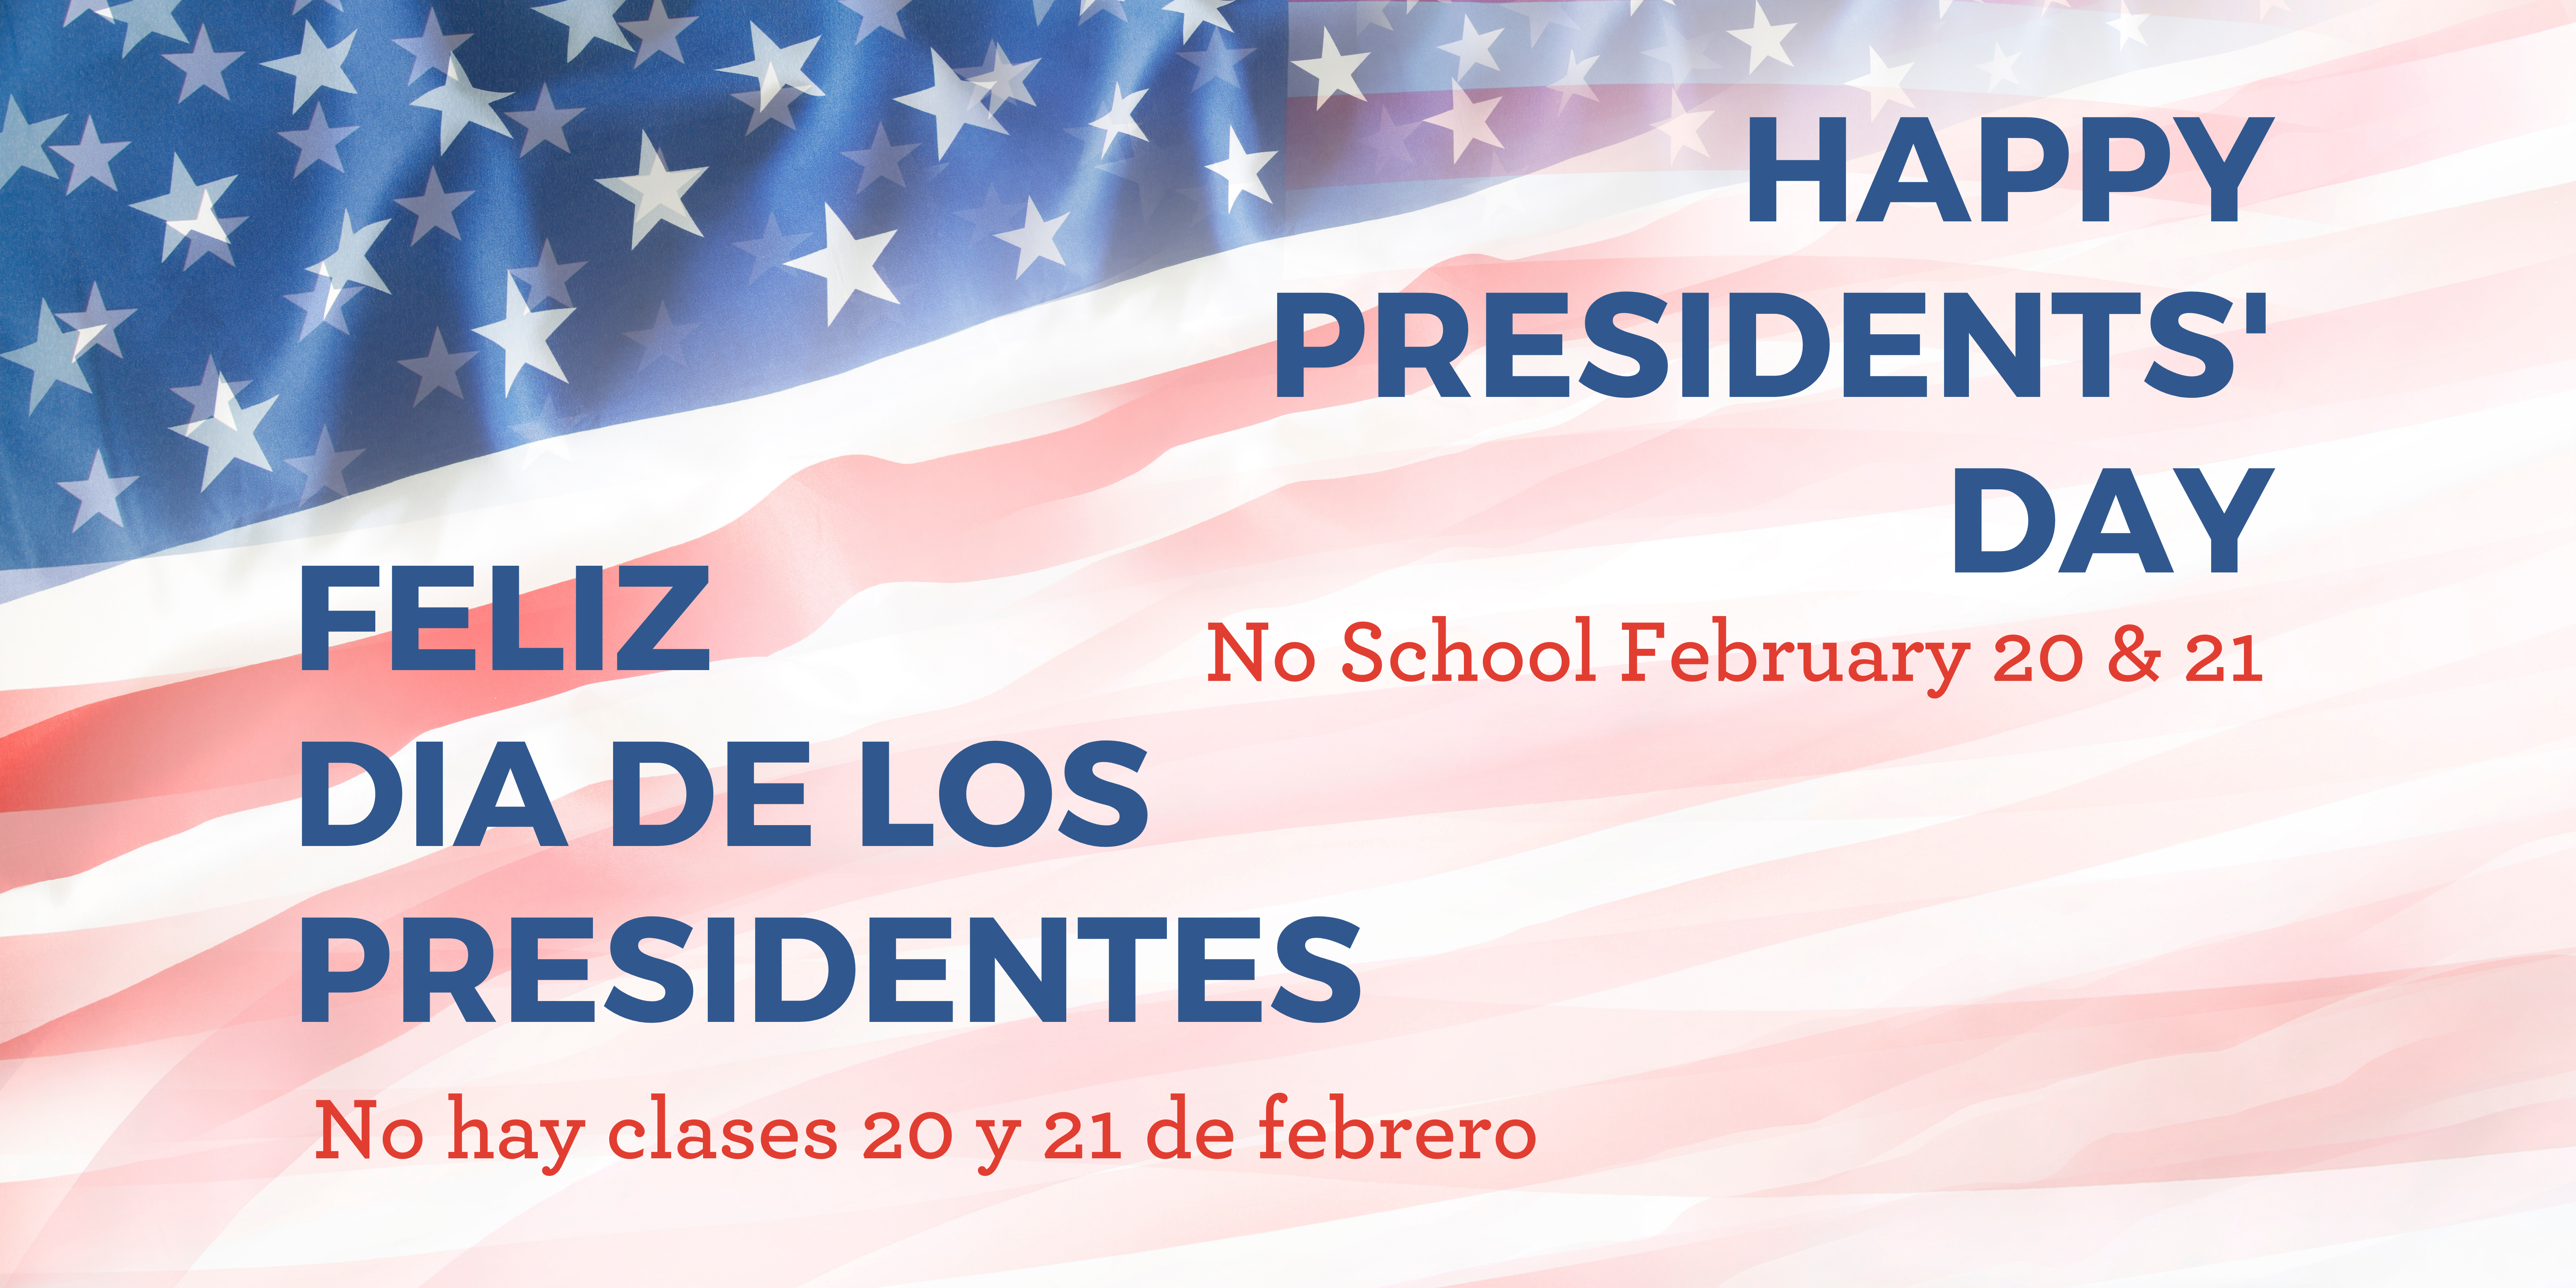 American flag background with "Happy Presidents' Day" and "Feliz Día de los Presidentes" in blue text and "No school February 20 & 21" and "No hay clases 20 y 21 de febrero" in red text.